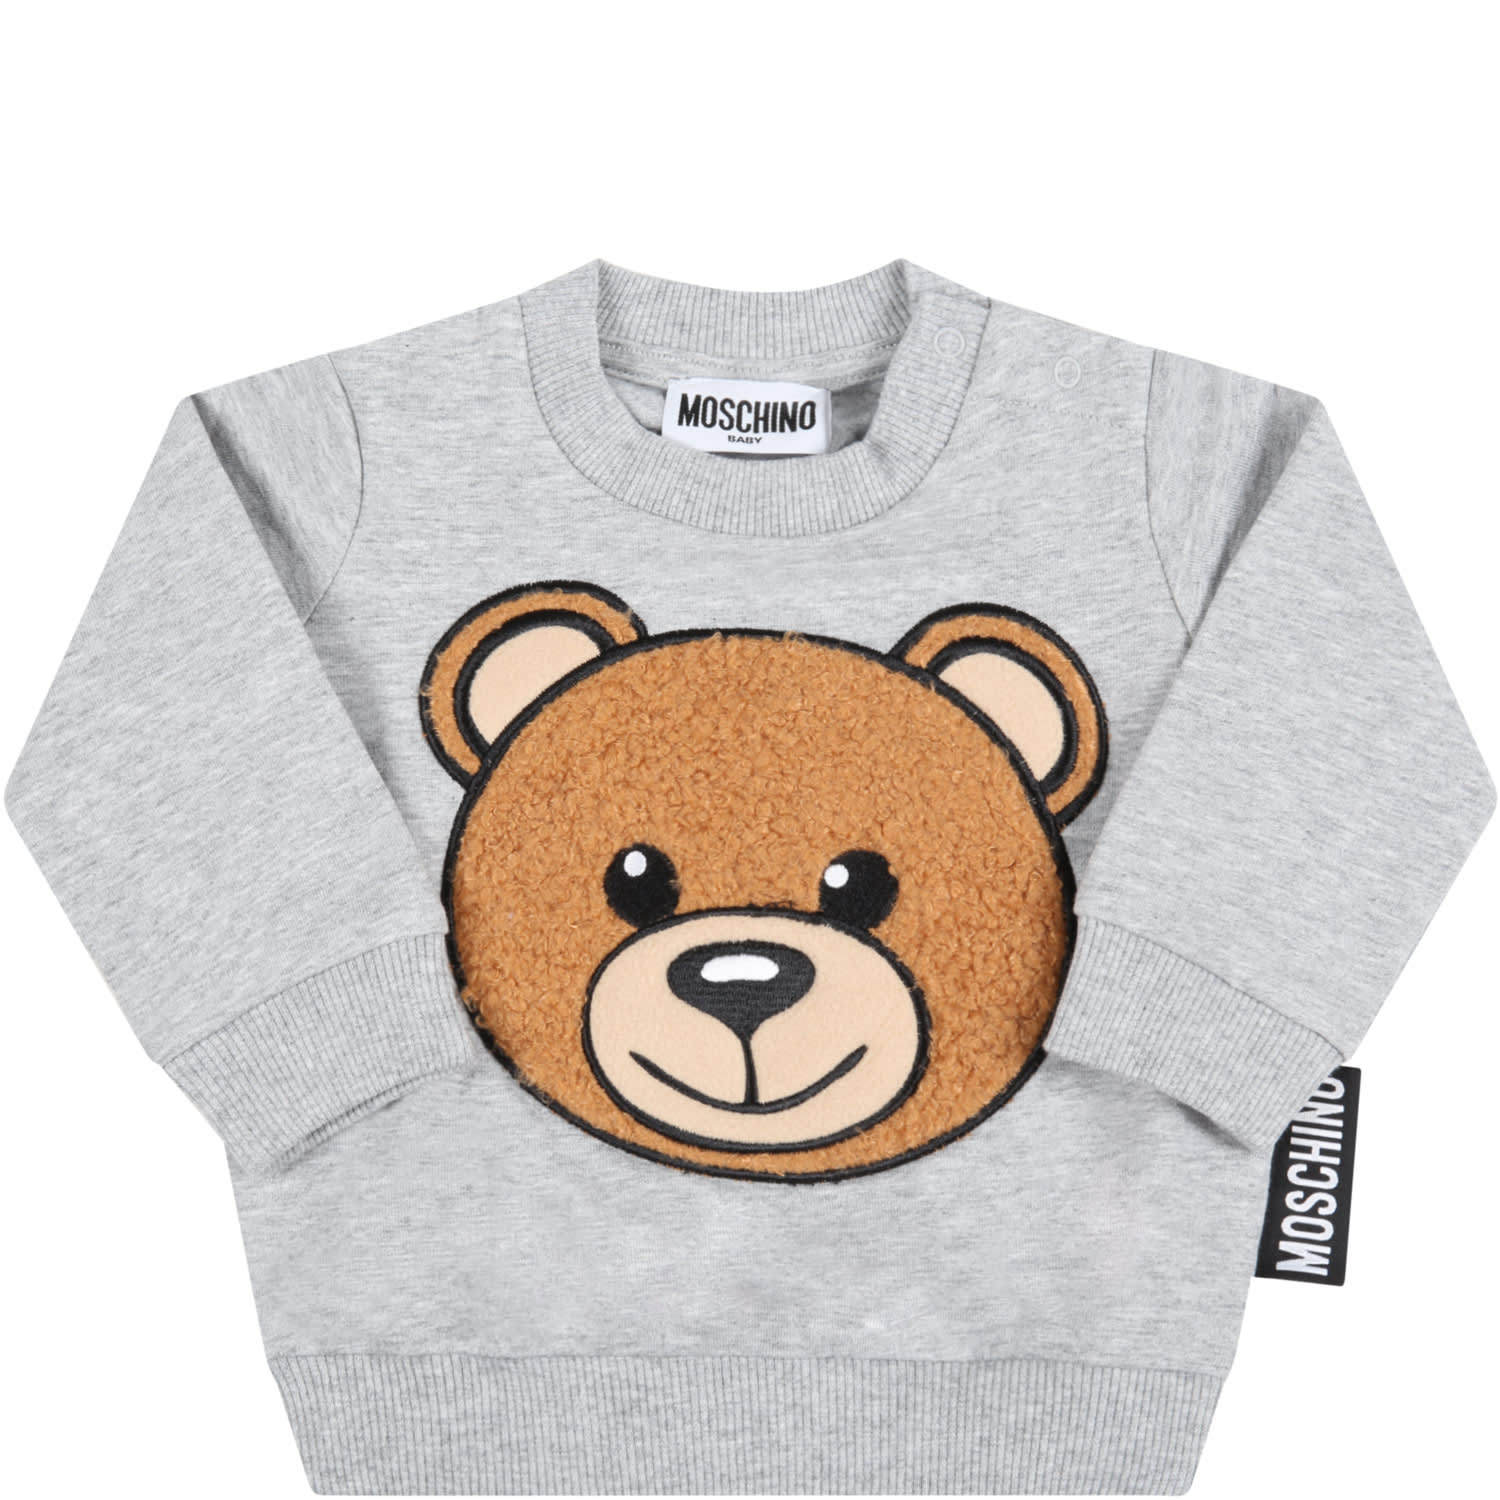 Moschino Grey Sweatshirt For Baby Kids With Teddy Bear